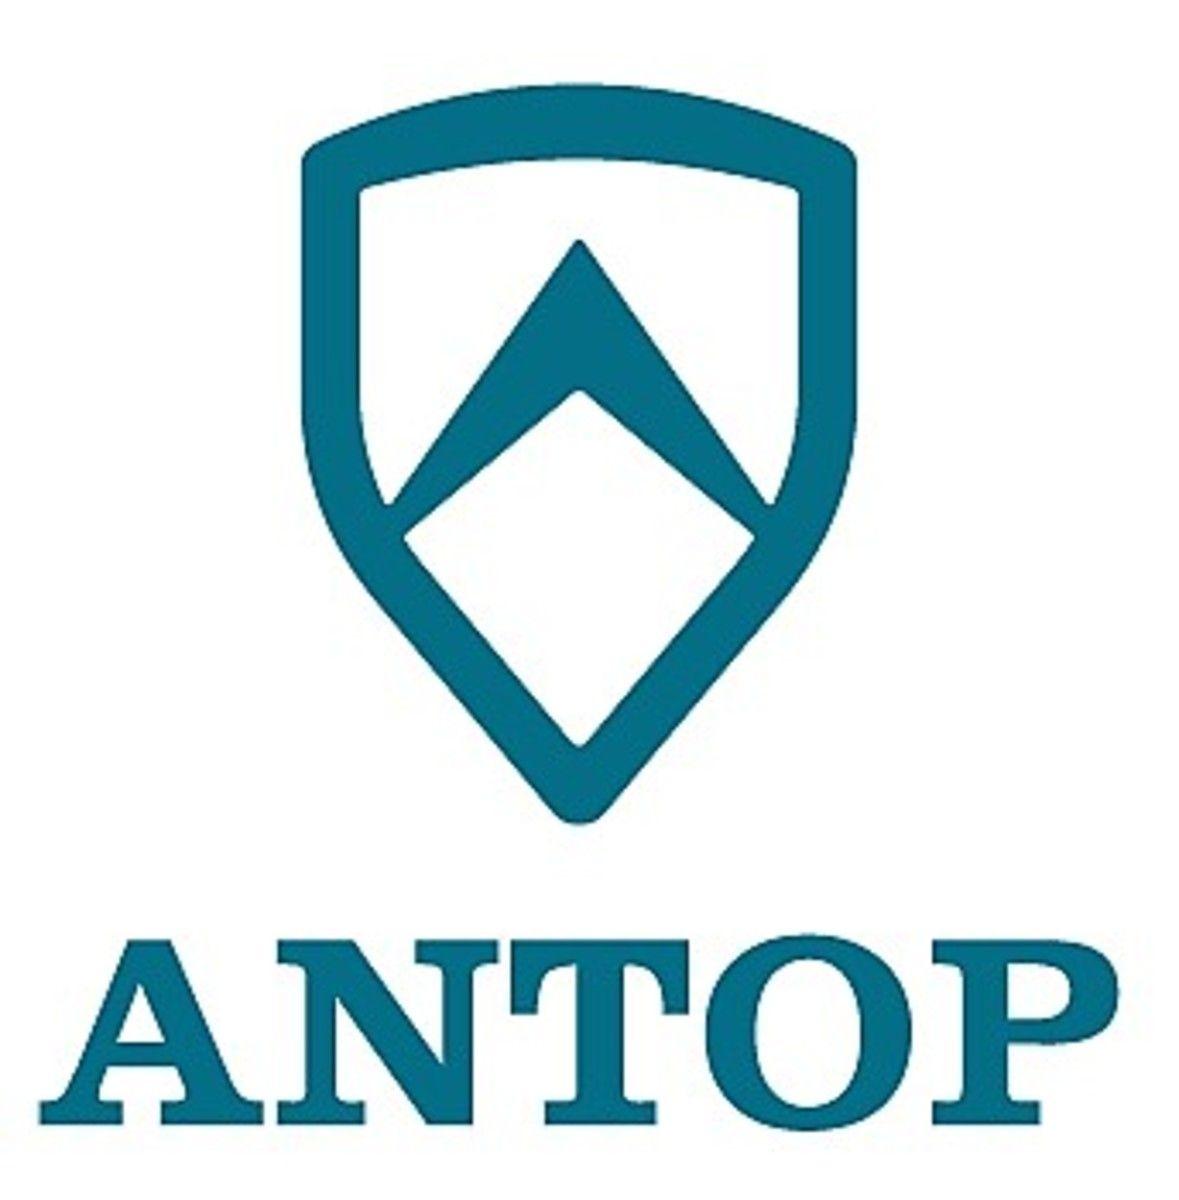 Antenna Logo - ANTOP Antenna Presents Itself as Both a Brand and Manufacturer at ...